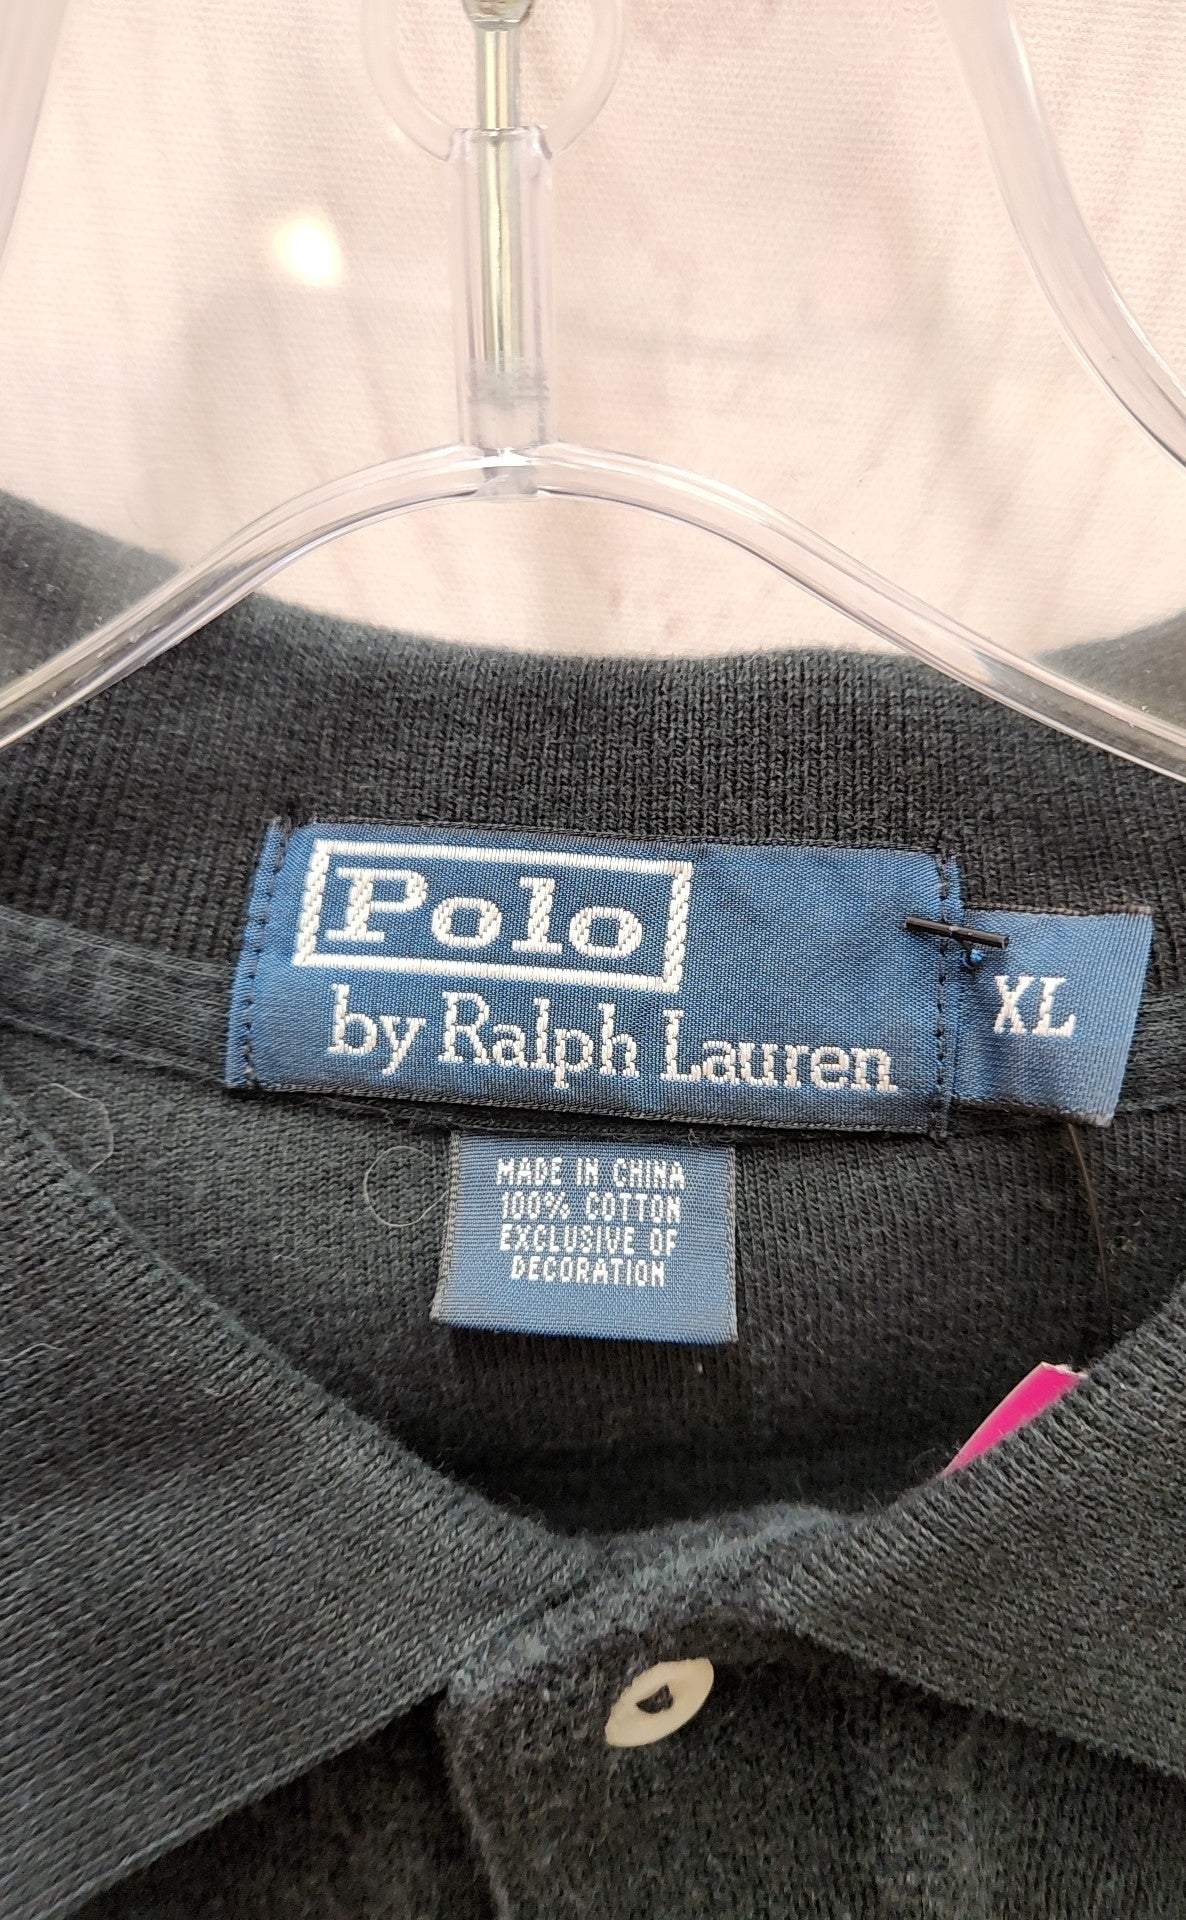 Polo by Ralph Lauren Men's Size XL Black Shirt